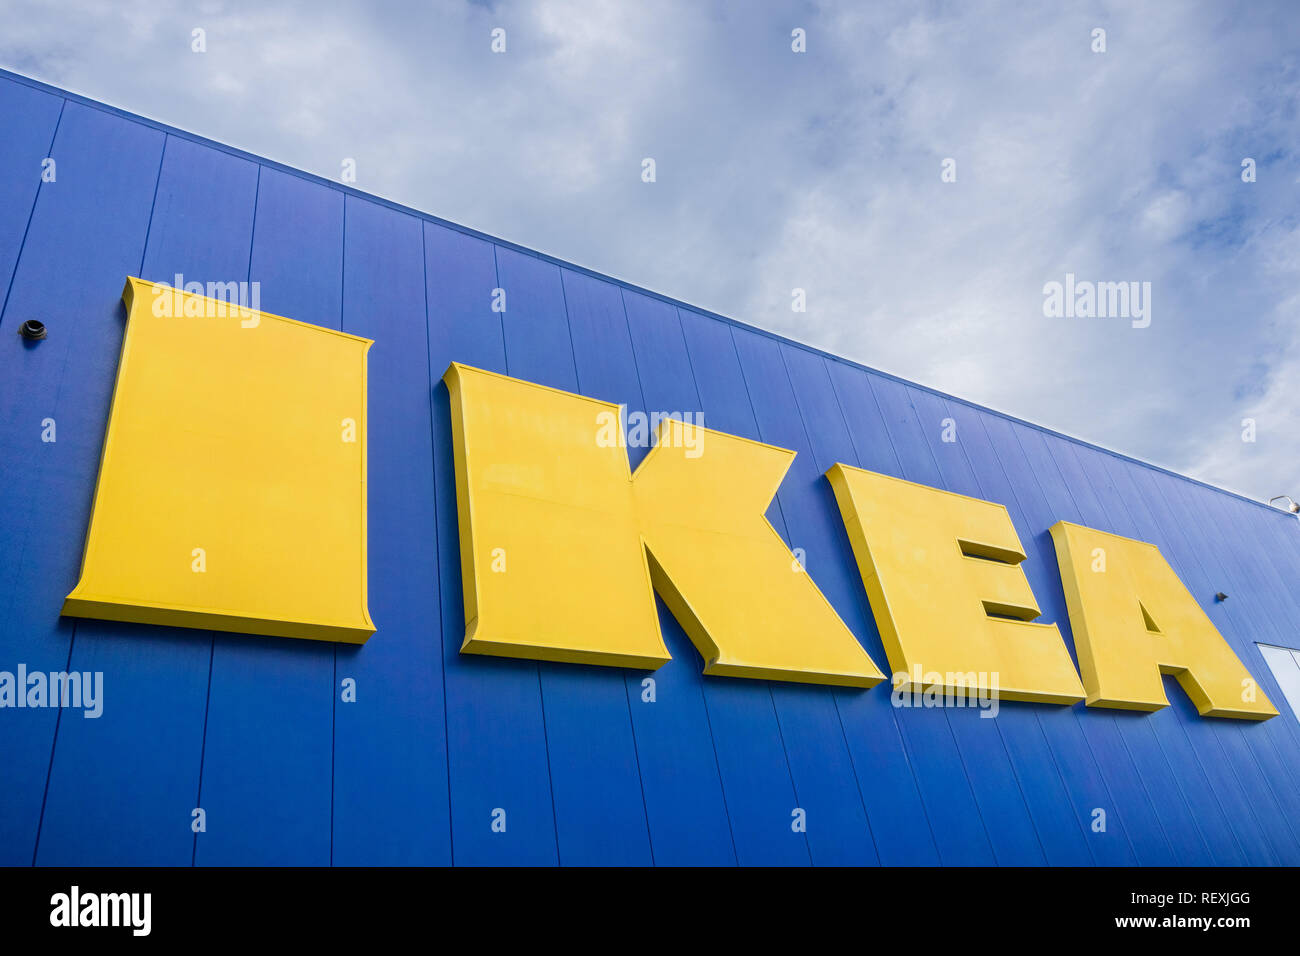 November 25, 2017 East Palo Alto/CA/USA - IKEA store logo on a cloudy sky background, Silicon Valley, San Francisco bay area Stock Photo